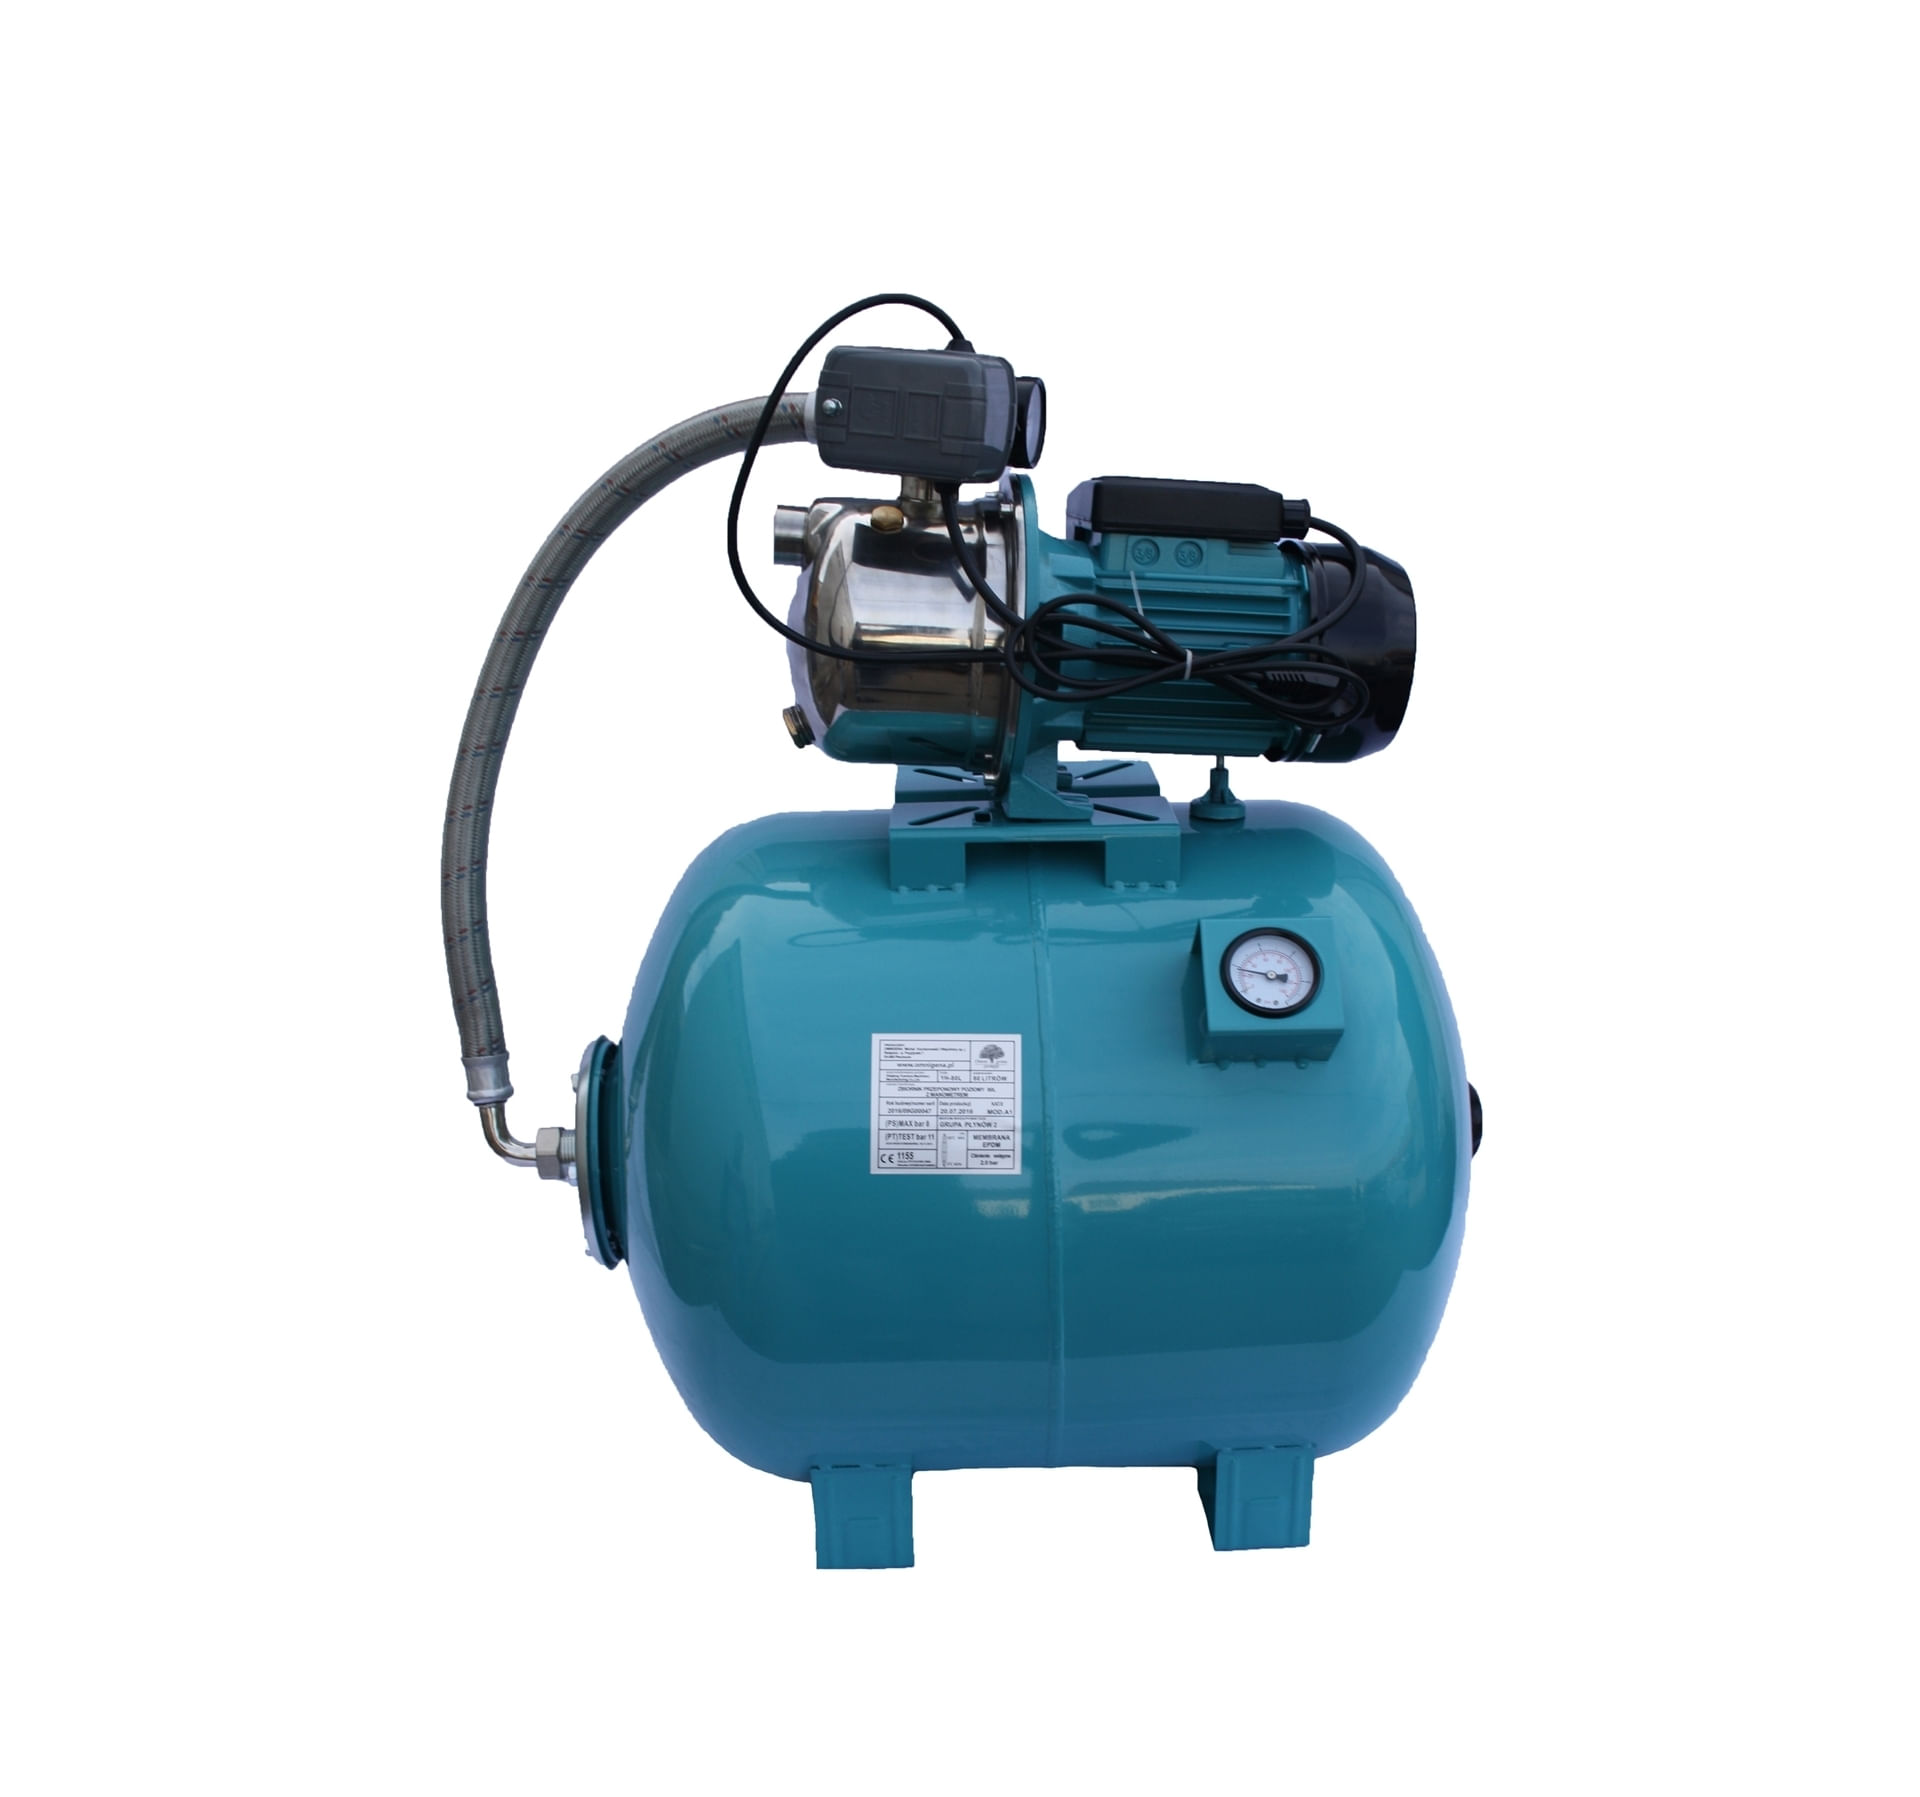 Hidrofor APC JY 1000/100 rezervor 100 litri cu manometru, 1.1Kw, 03020119/100M